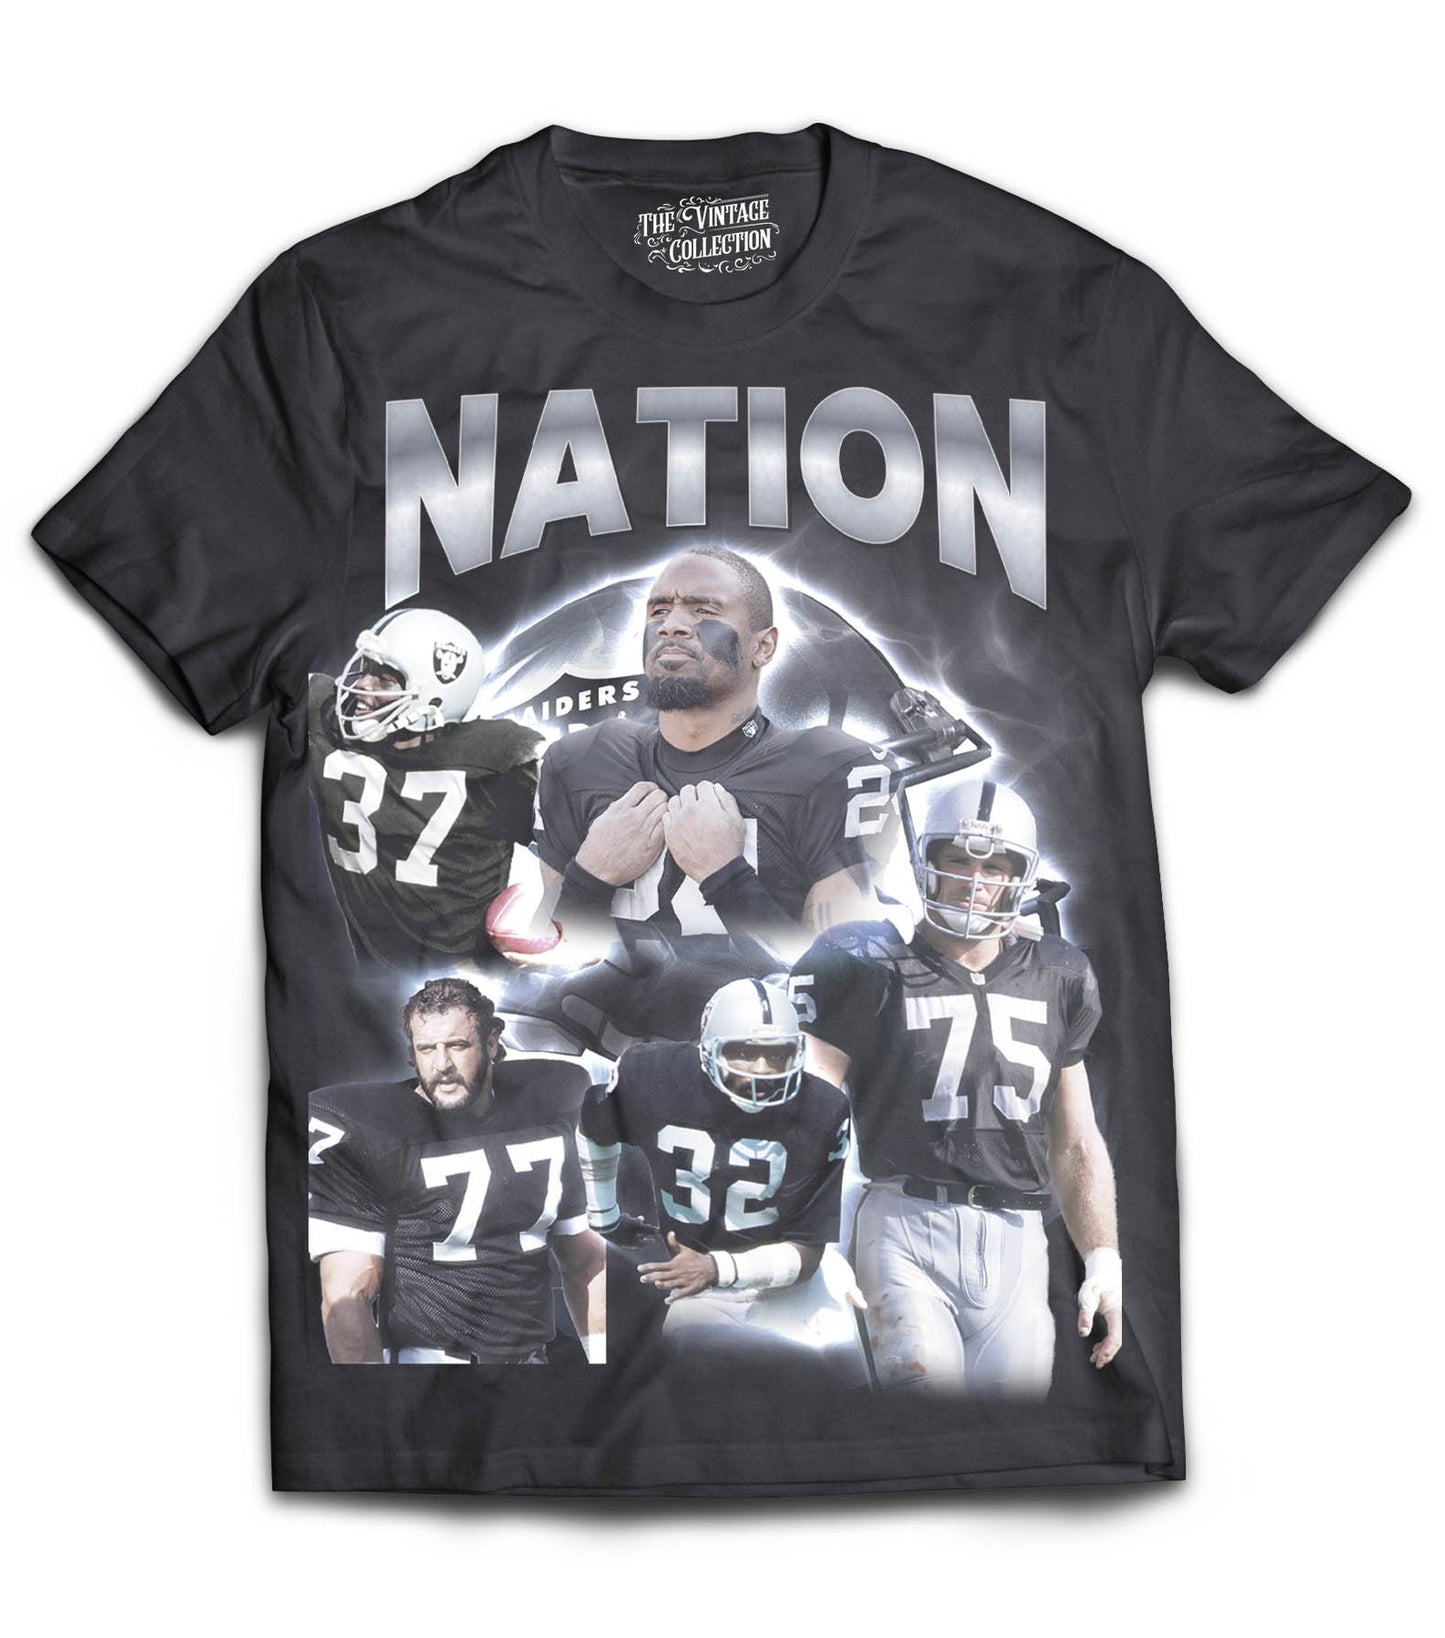 Nation Tribute Shirt (Black)